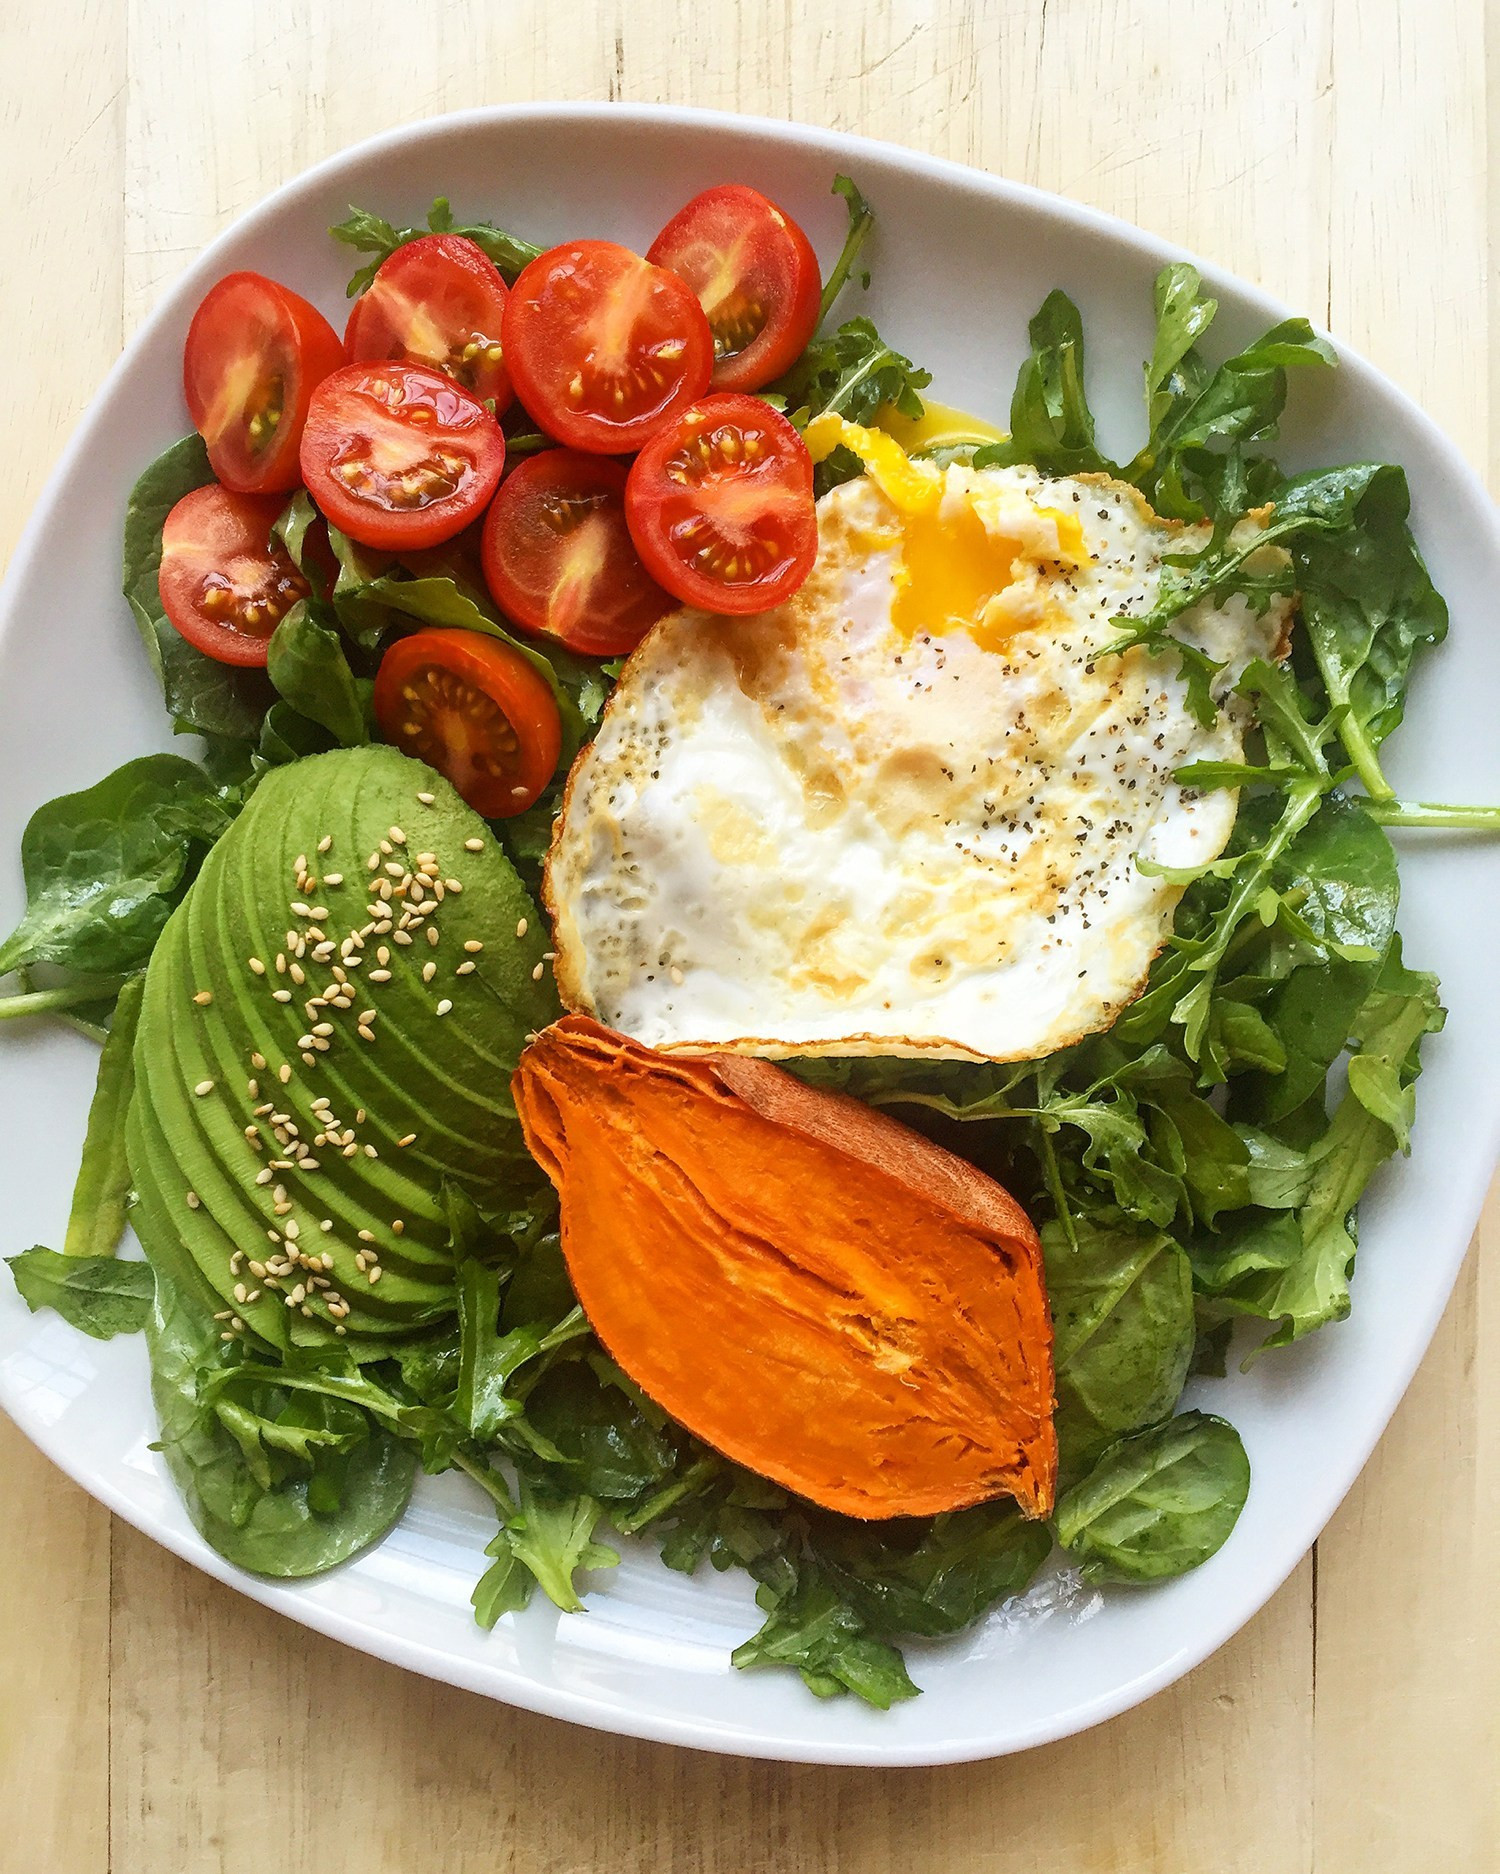 Healthy Fats For Breakfast
 Building a Balanced Breakfast